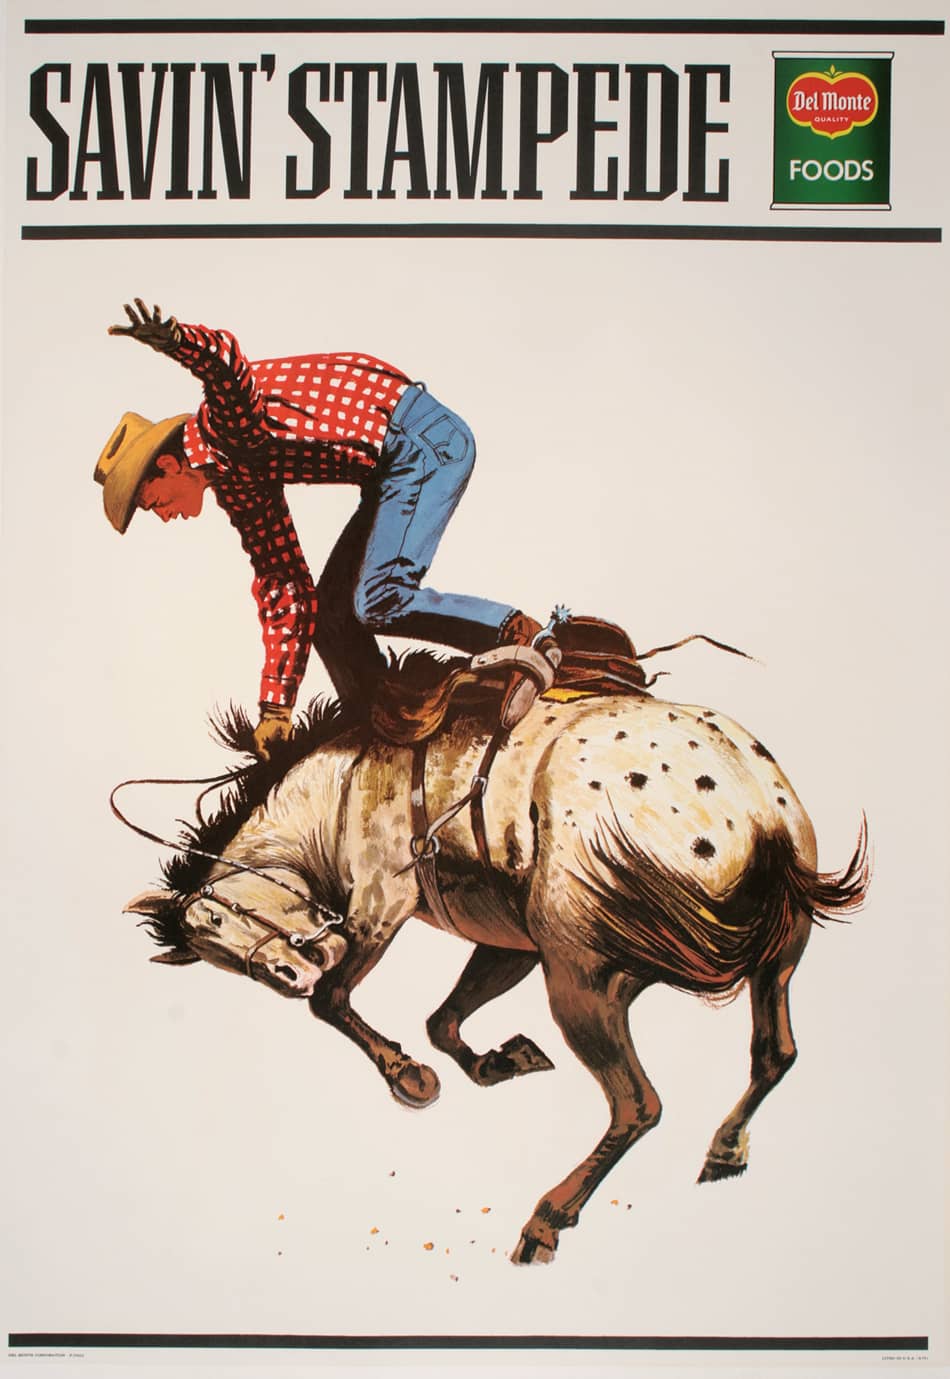 Del Monte Roundup Original Vintage Poster - Cowboy on Bucking Horse c1965